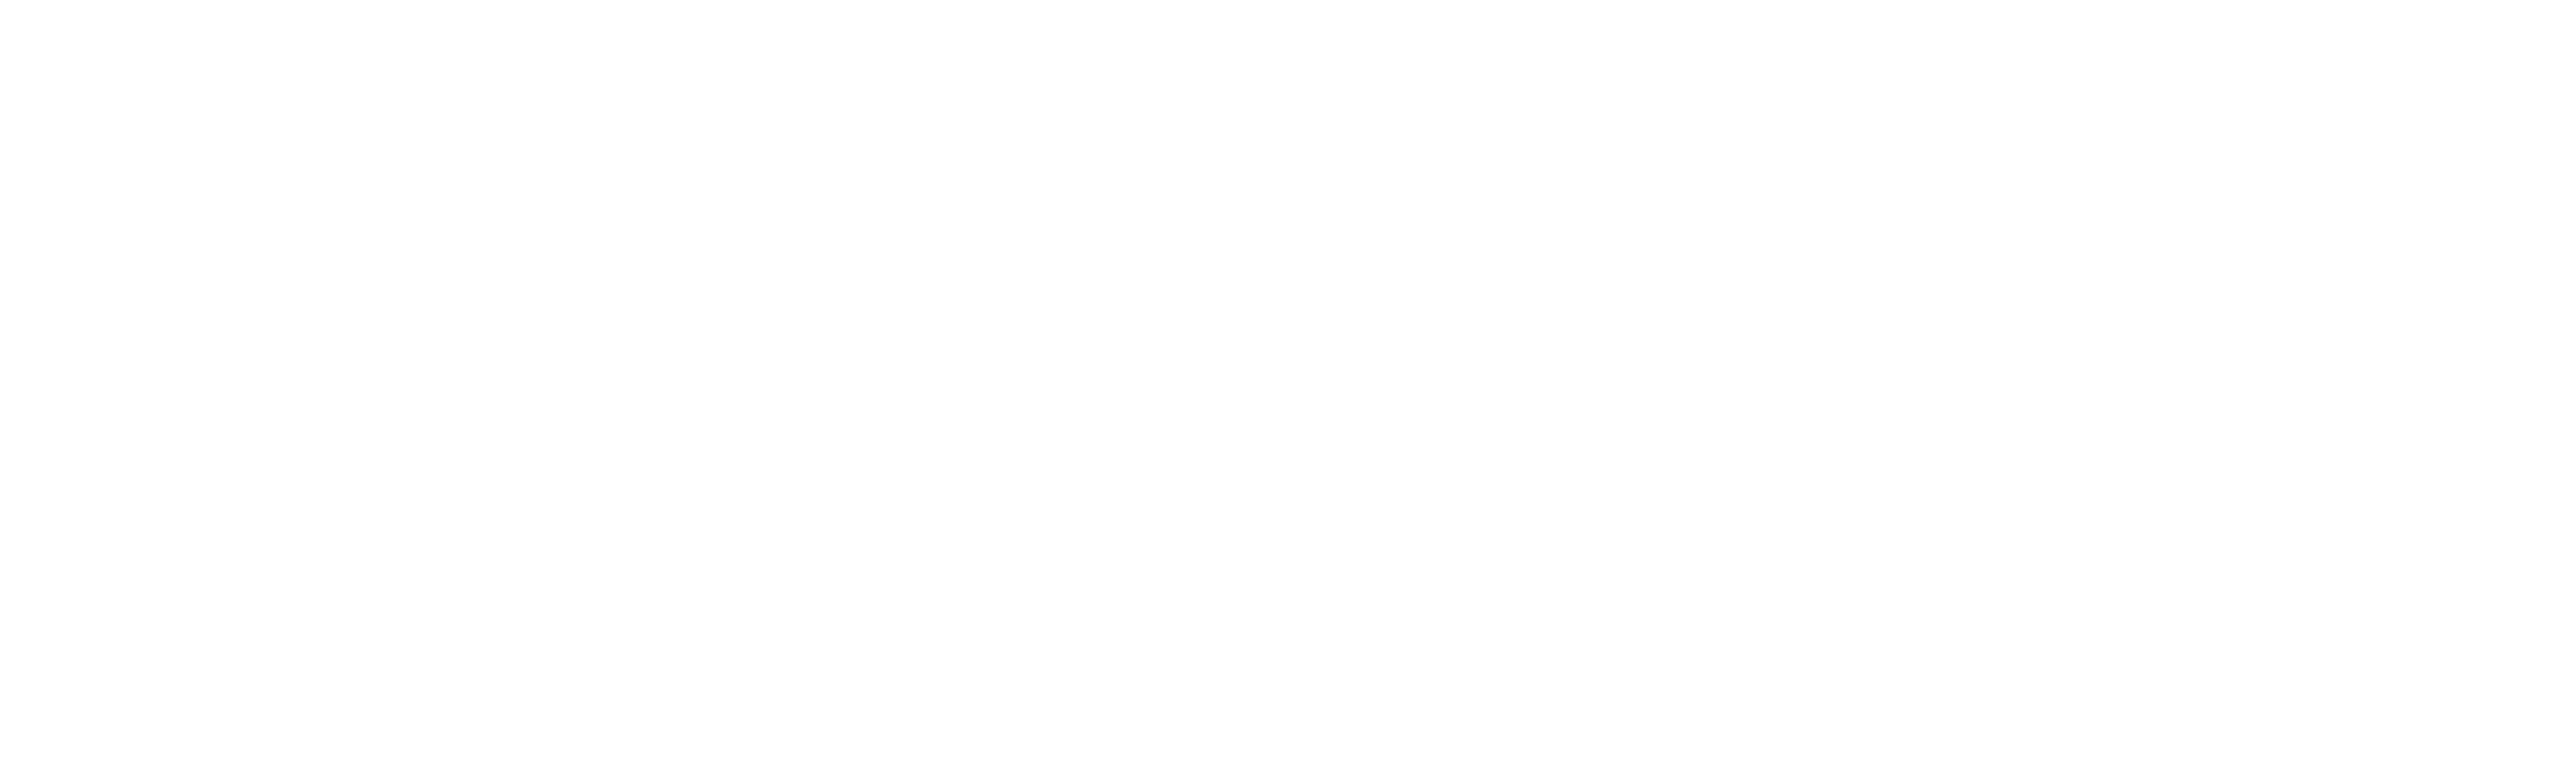 KOUMENTAKIS & ASSOCIATES Law Firm Beyond Legal Services